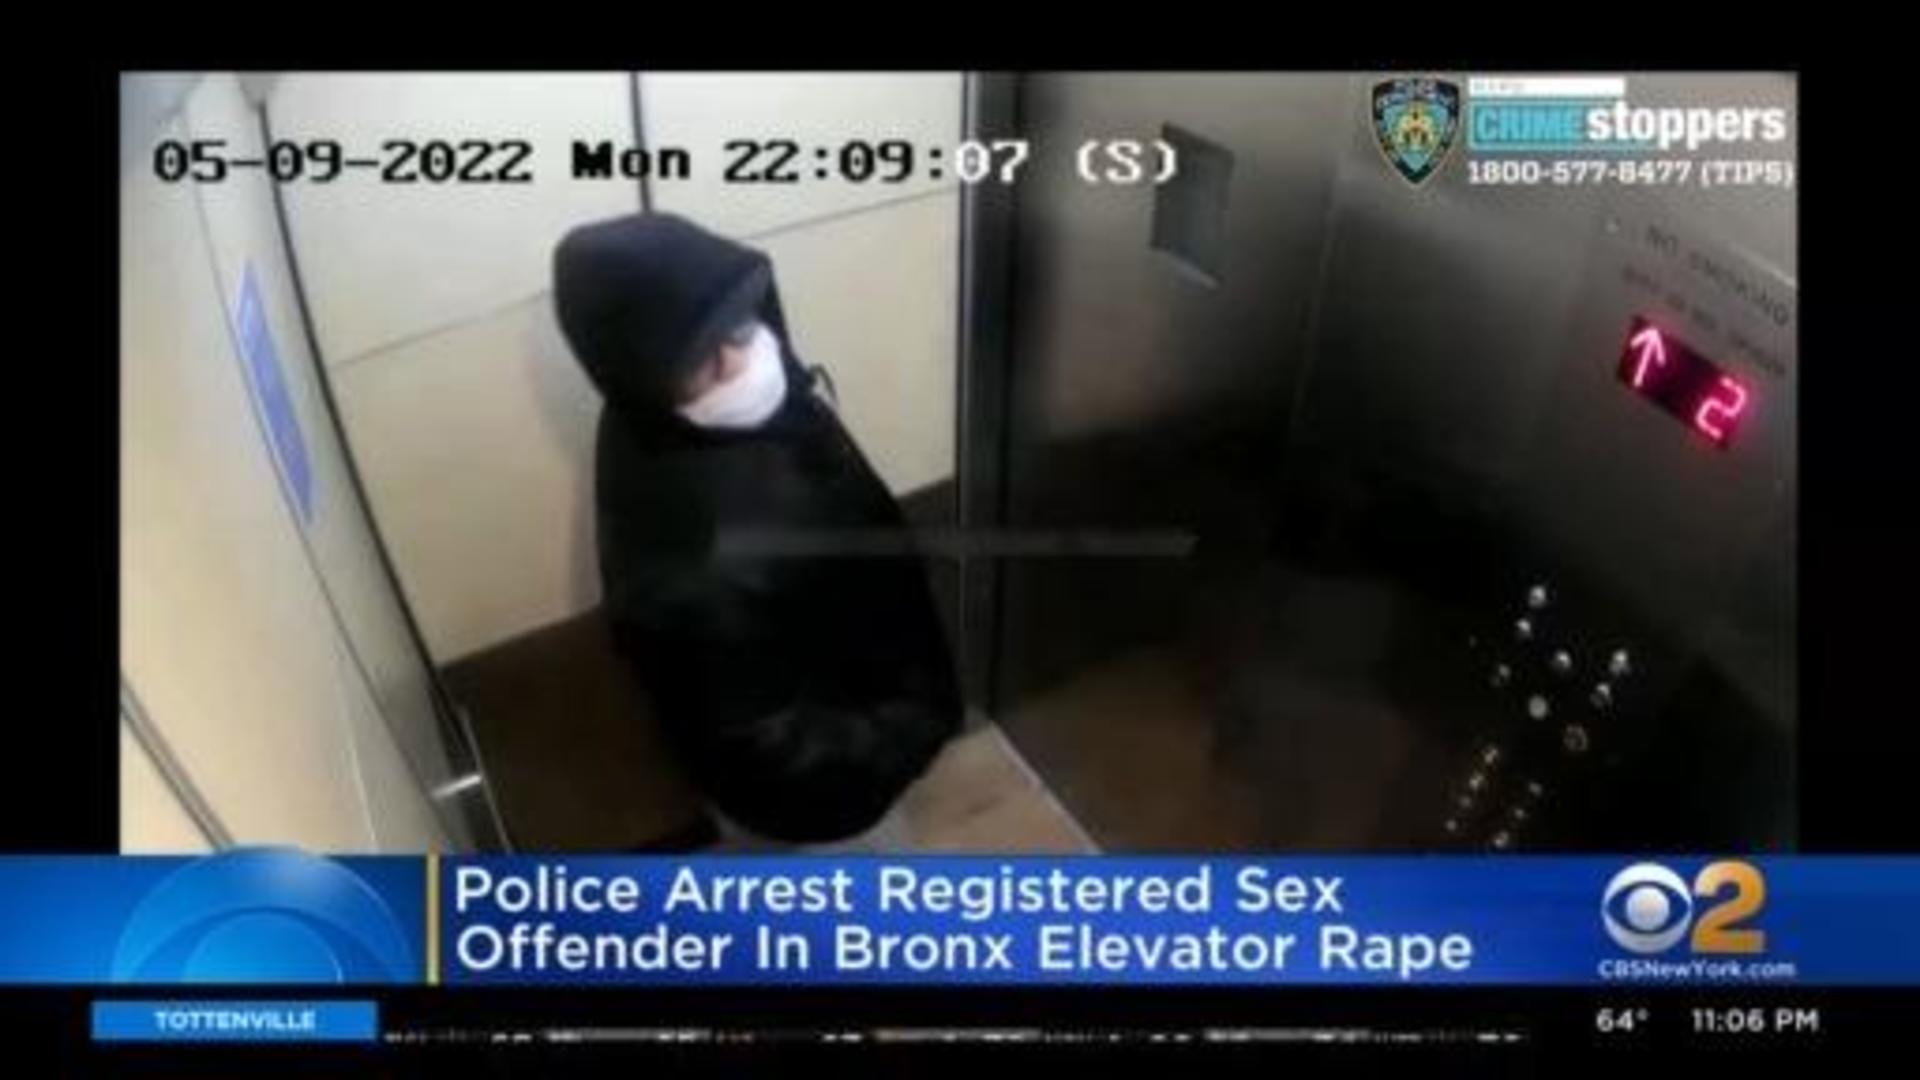 Xxx Rapp Videos - Police arrest registered sex offender in Bronx elevator rape - CBS New York